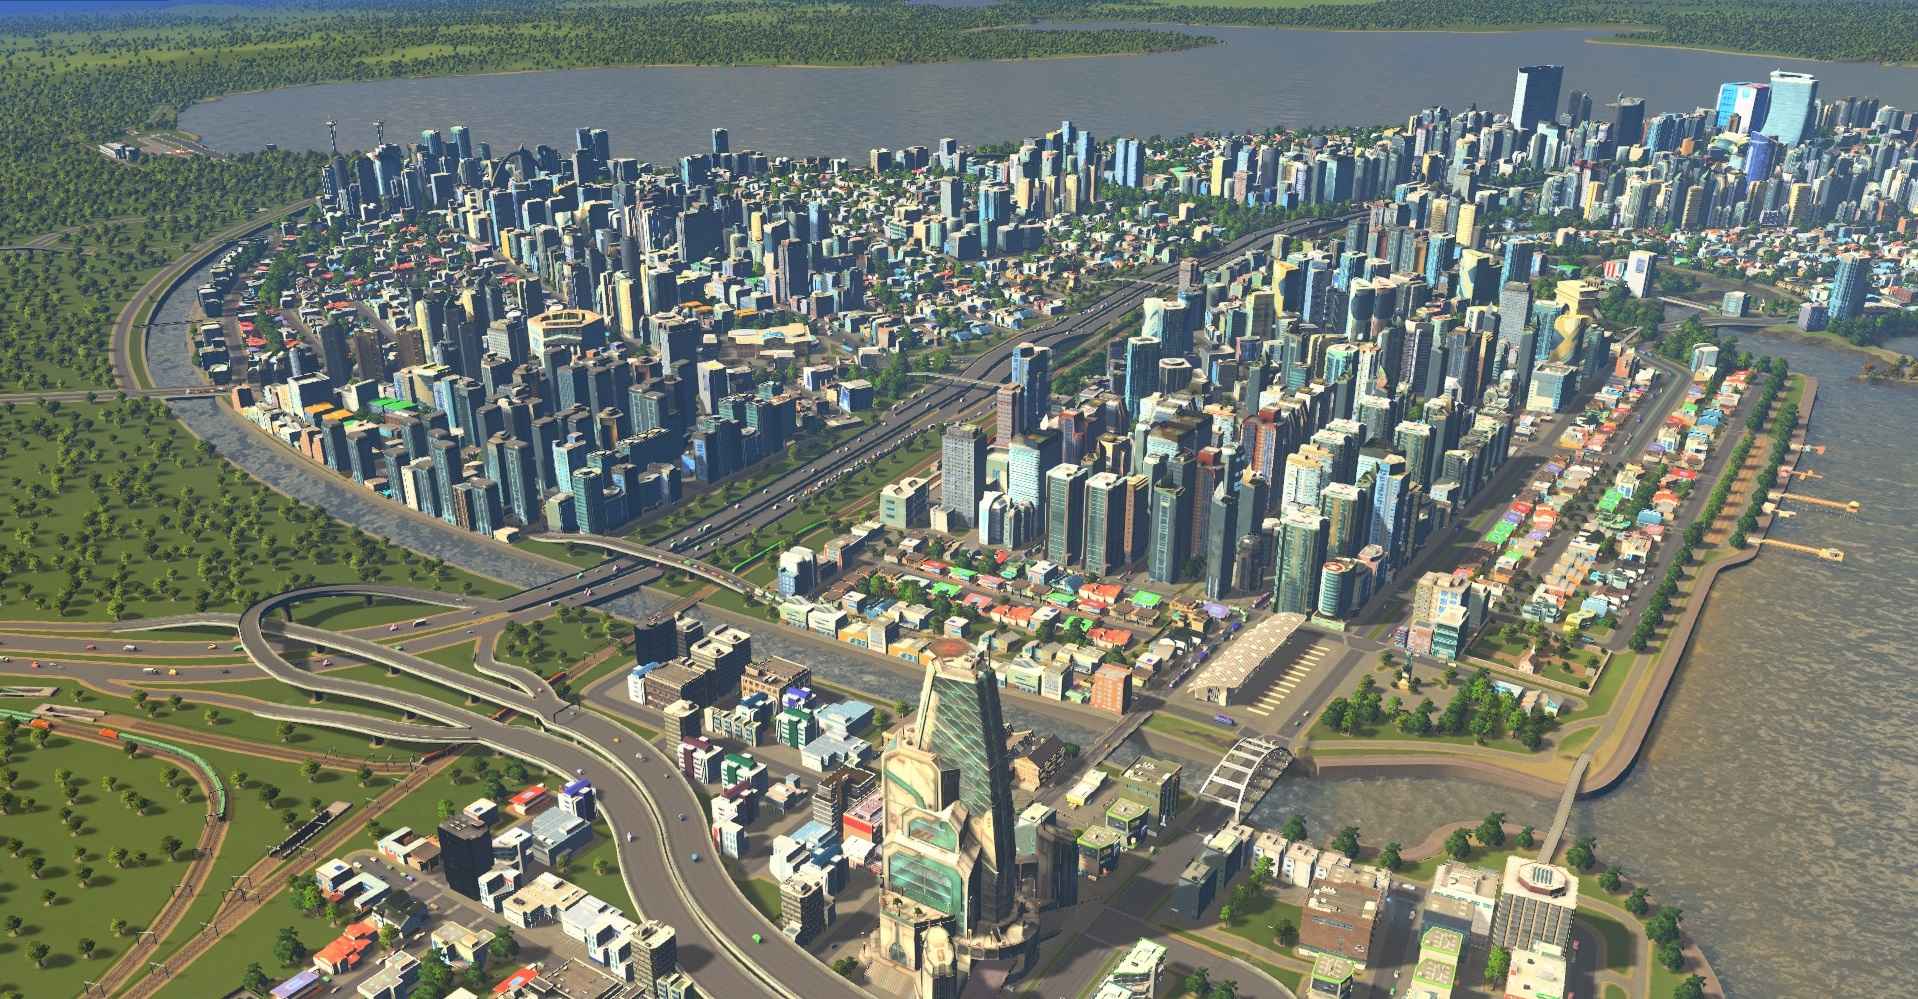 mod tools cities skylines